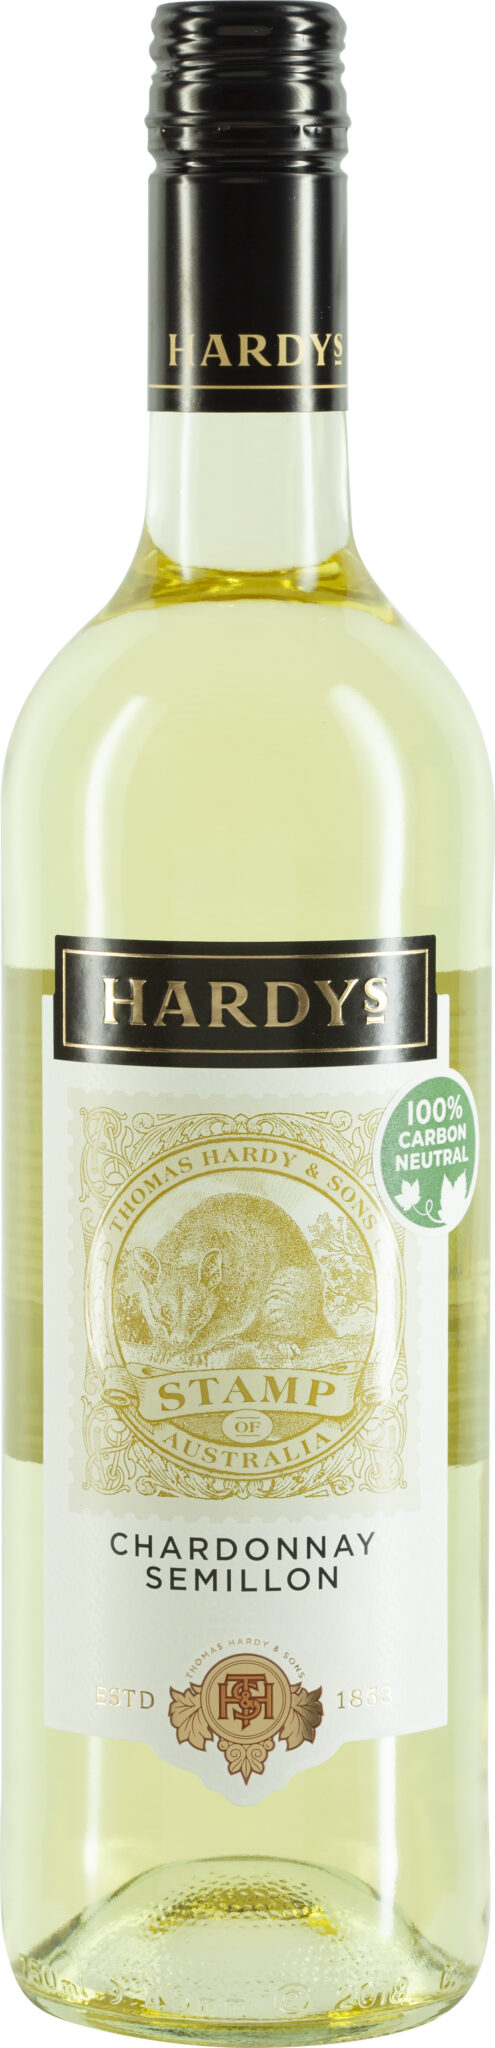 Hardys Stamp, Chardonnay Semillon South East Australia